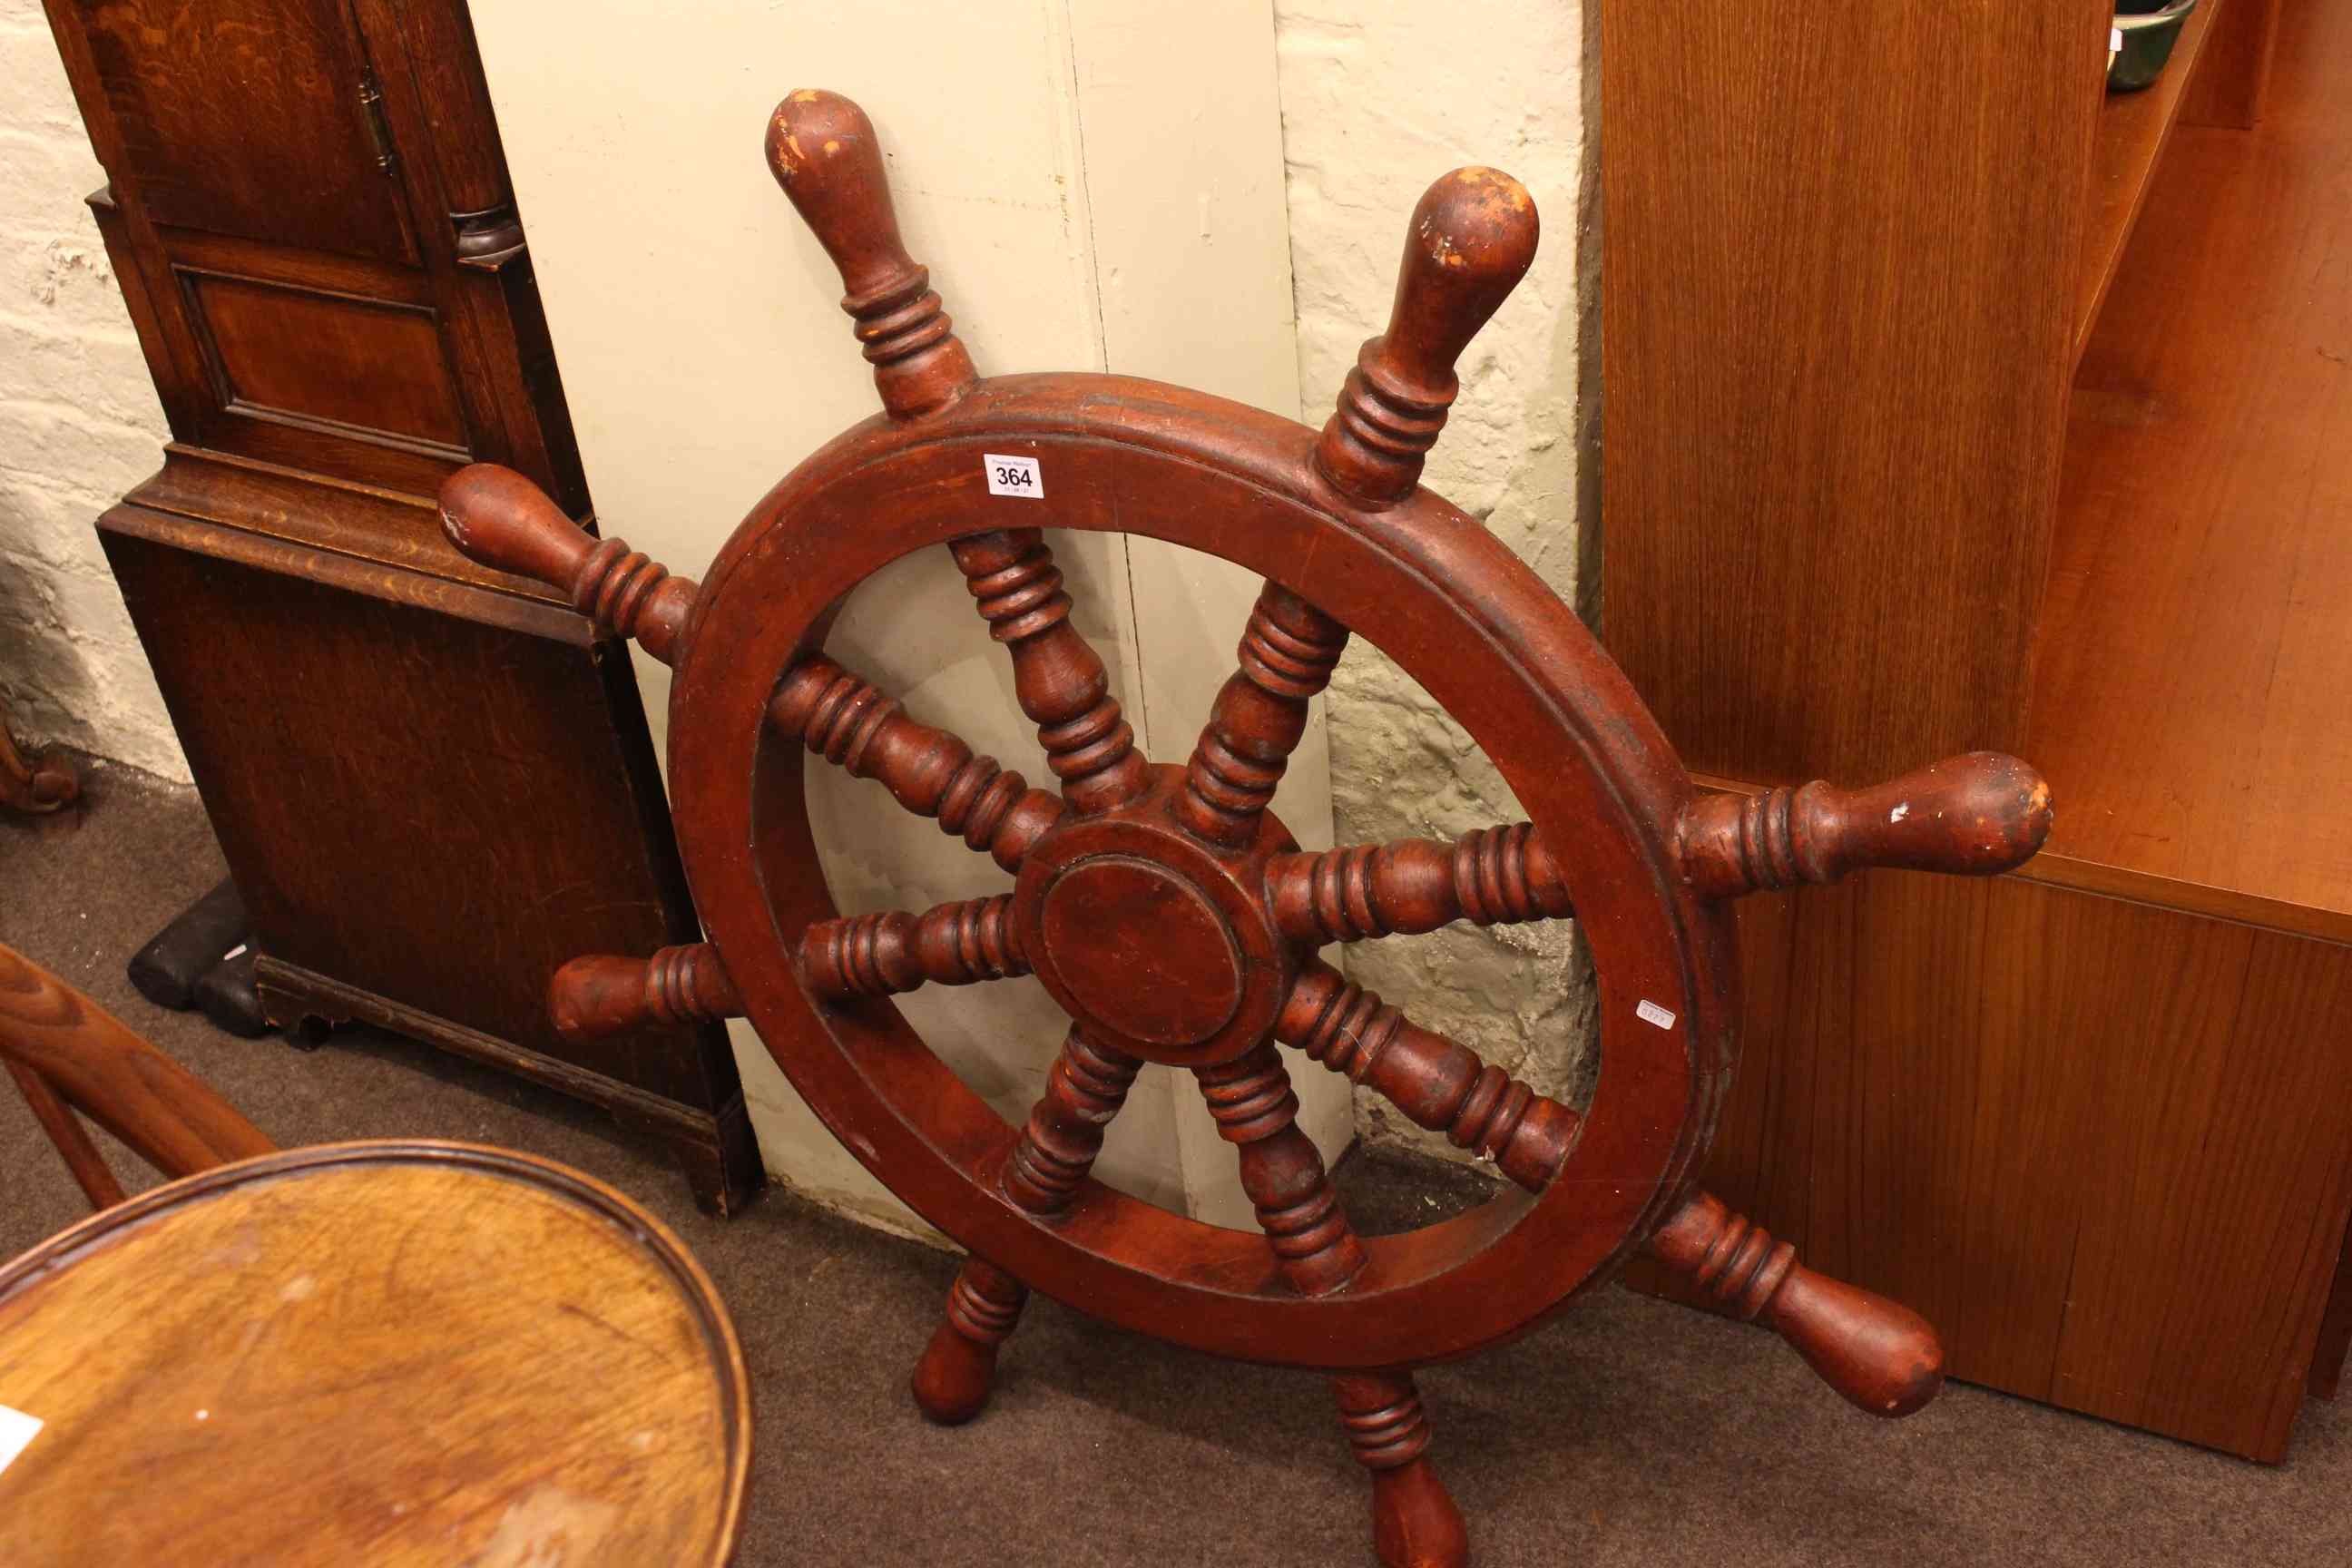 Large eight spoke ships wheel.